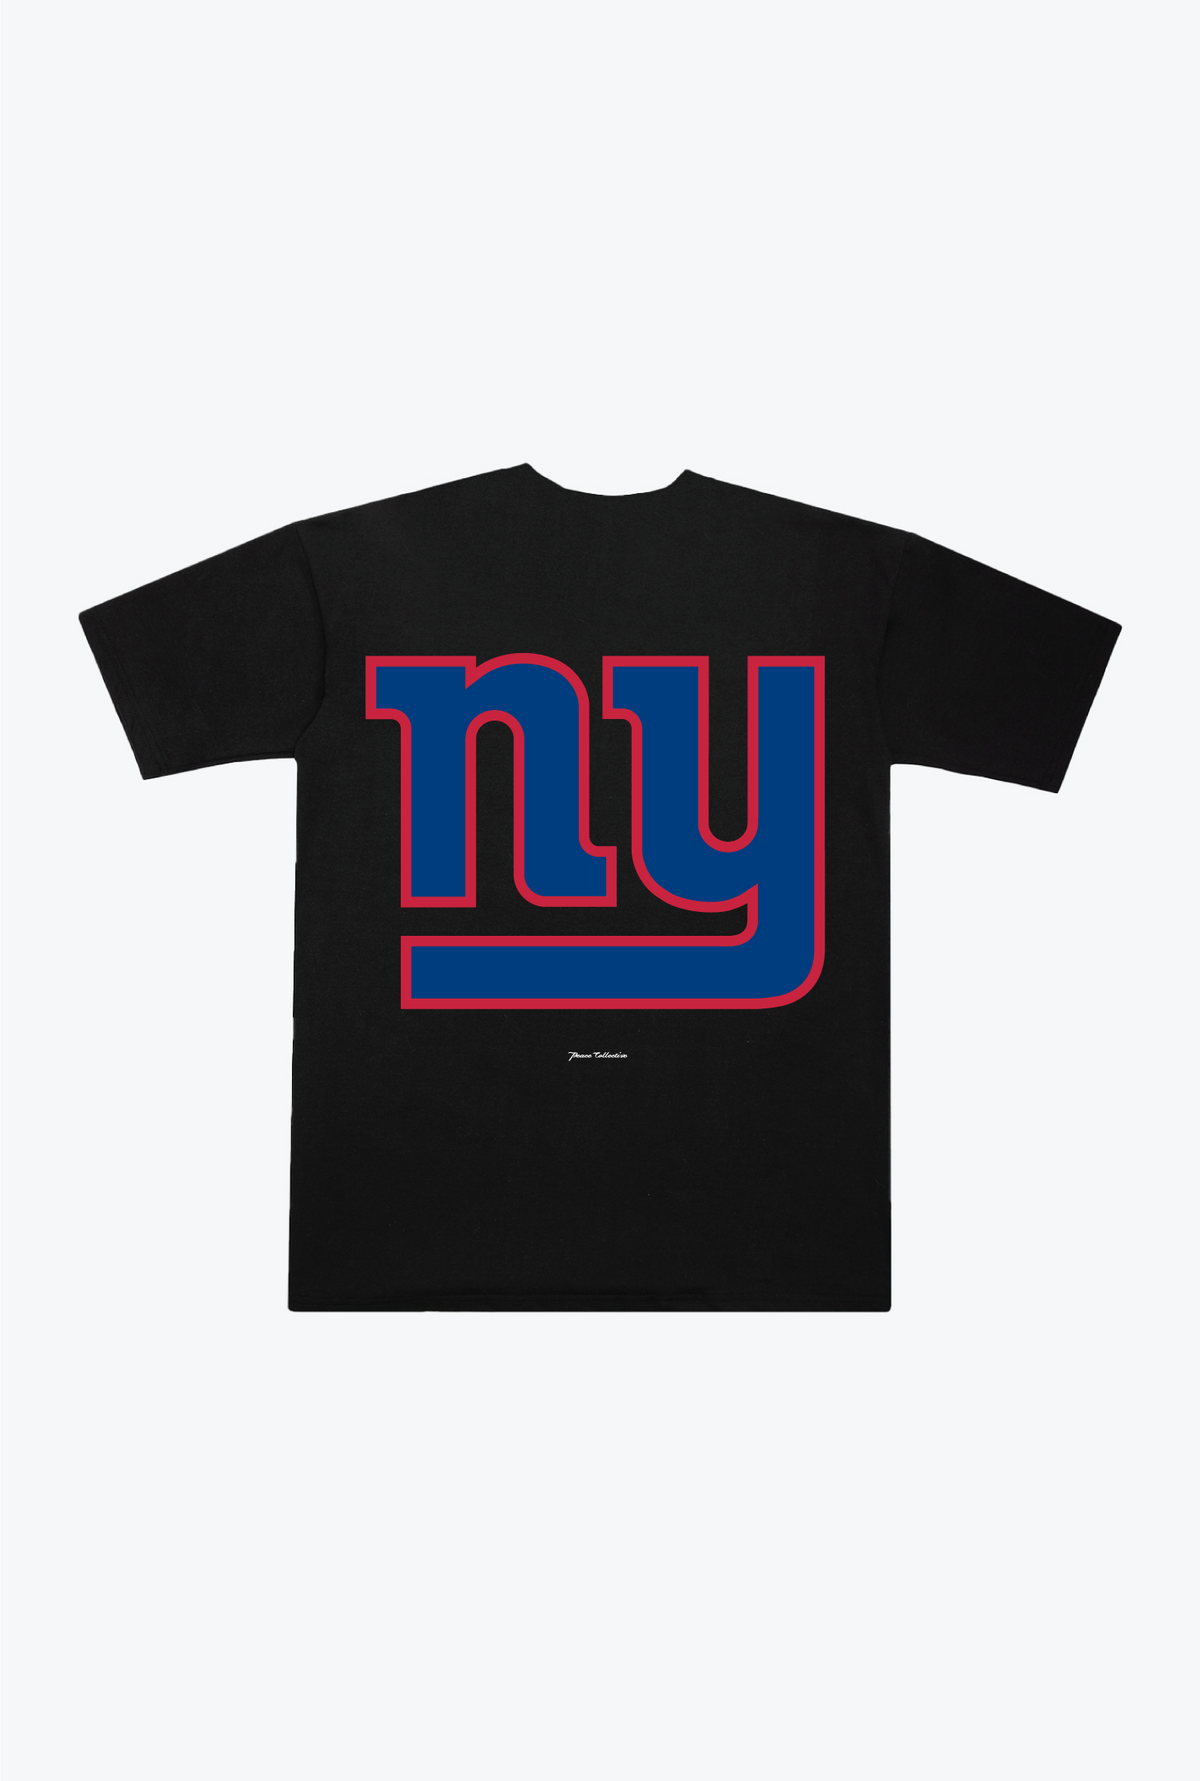 New York Giants Heavyweight T-Shirt - Black